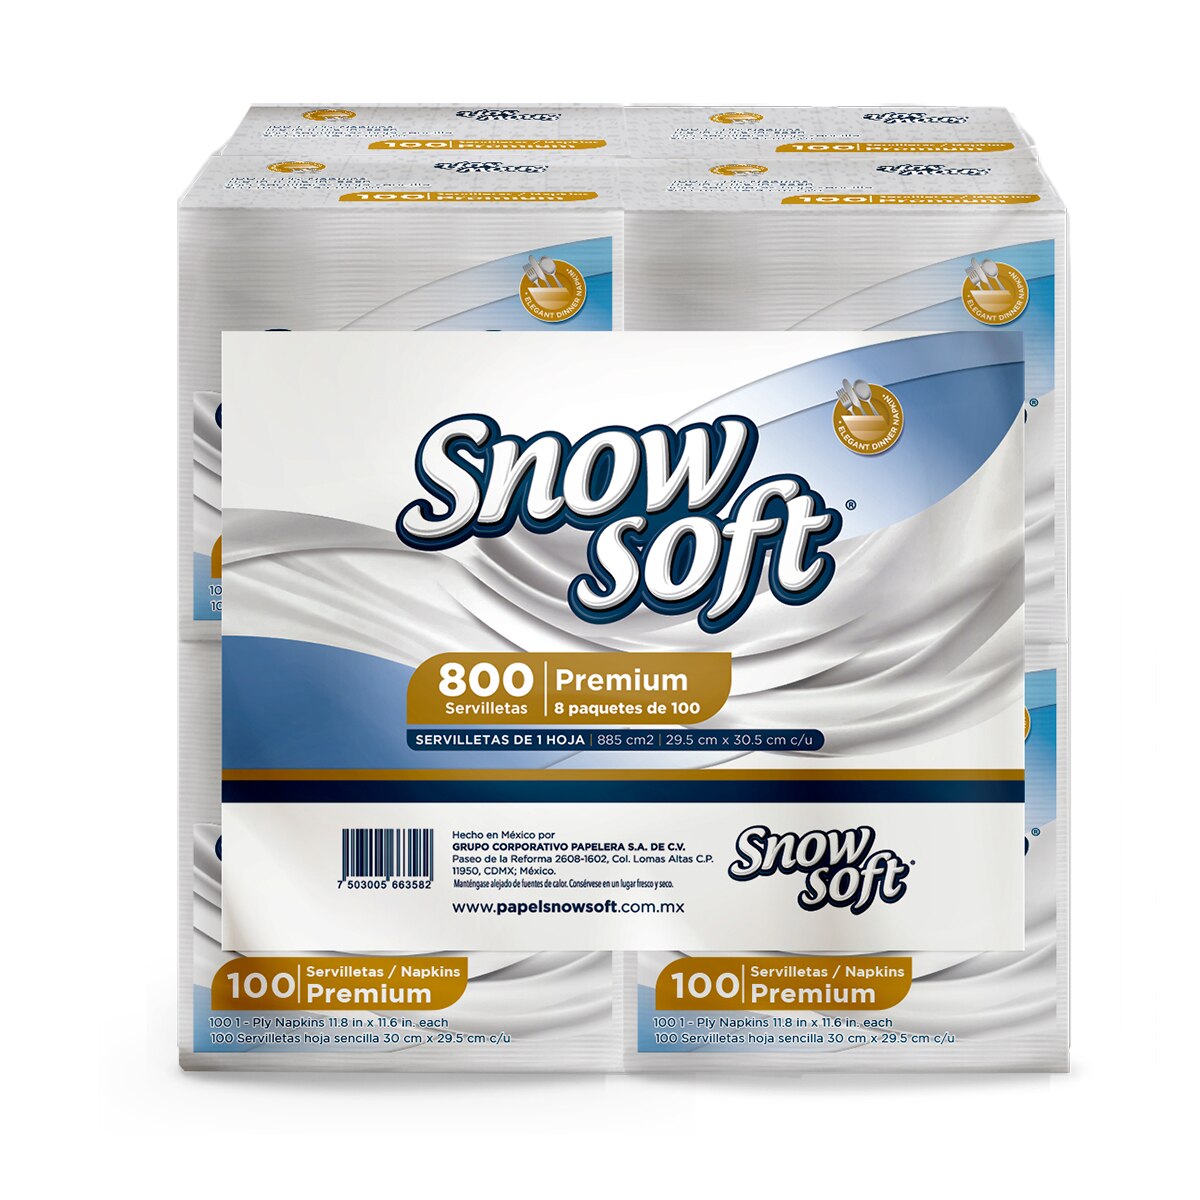 Snow Soft Servilletas Premium8 paquetes de 100 servilletas